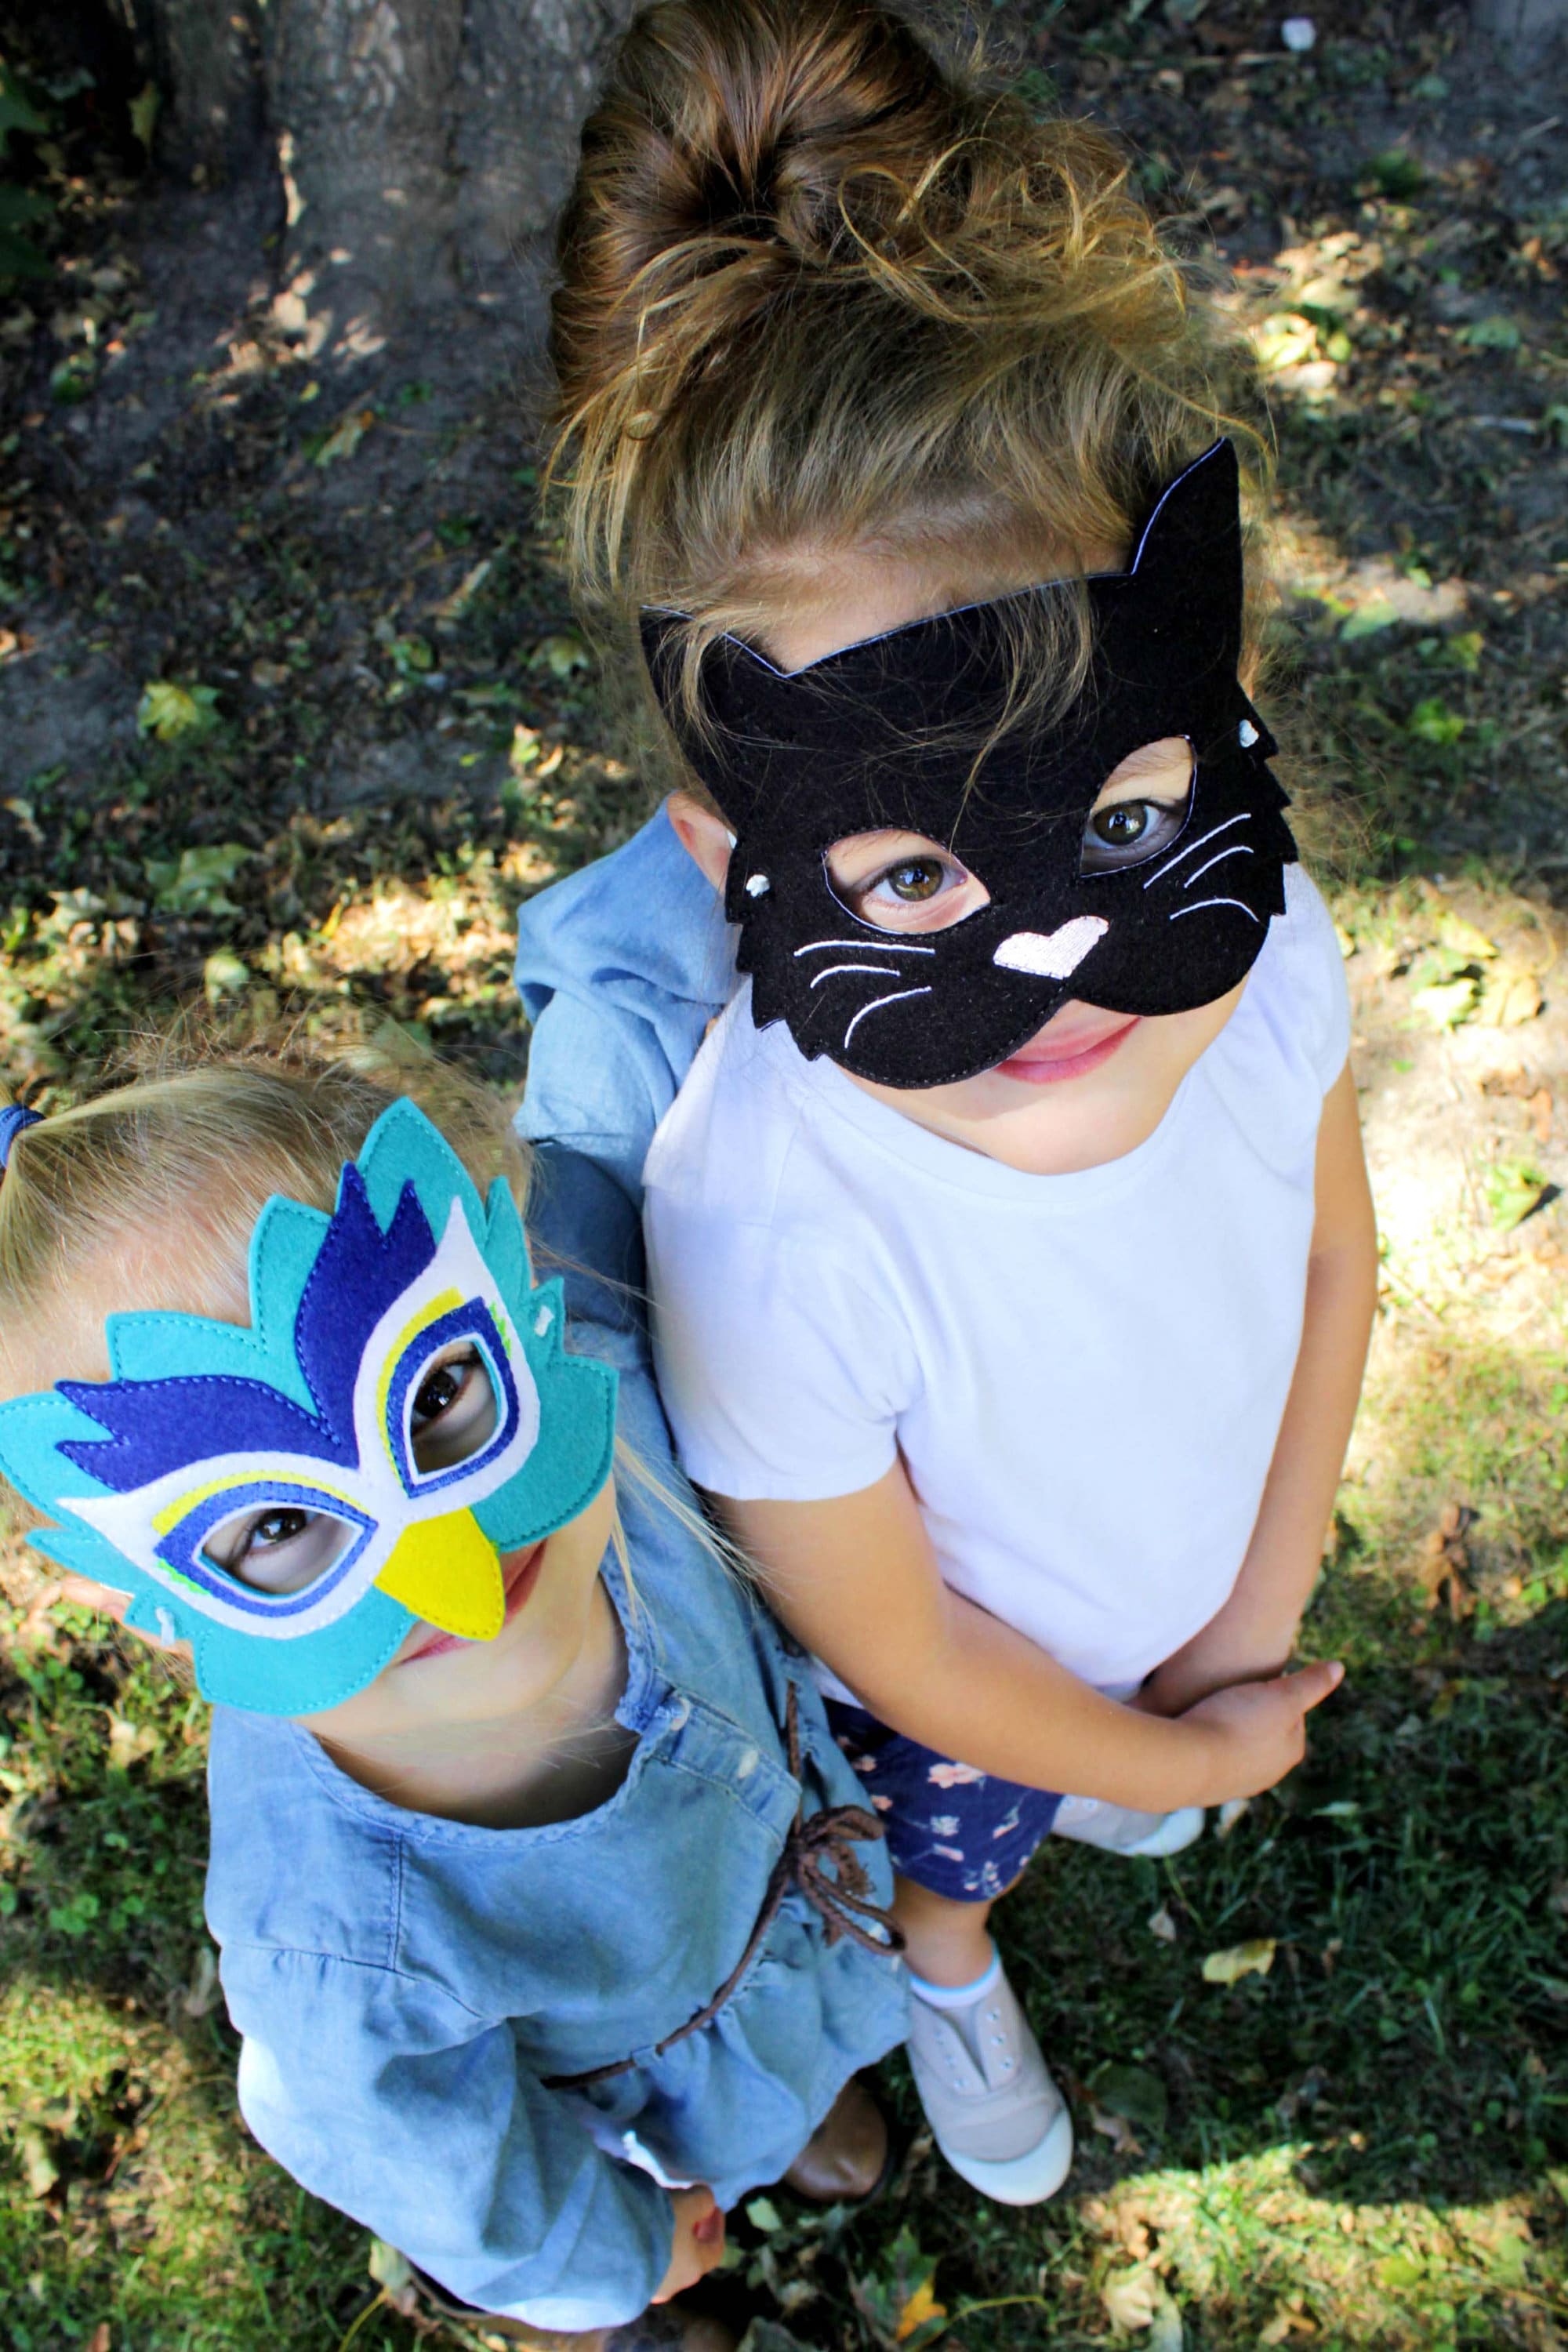 Cat Mask Halloween, Cat Head Mask Costume, Full Head Cat Masks